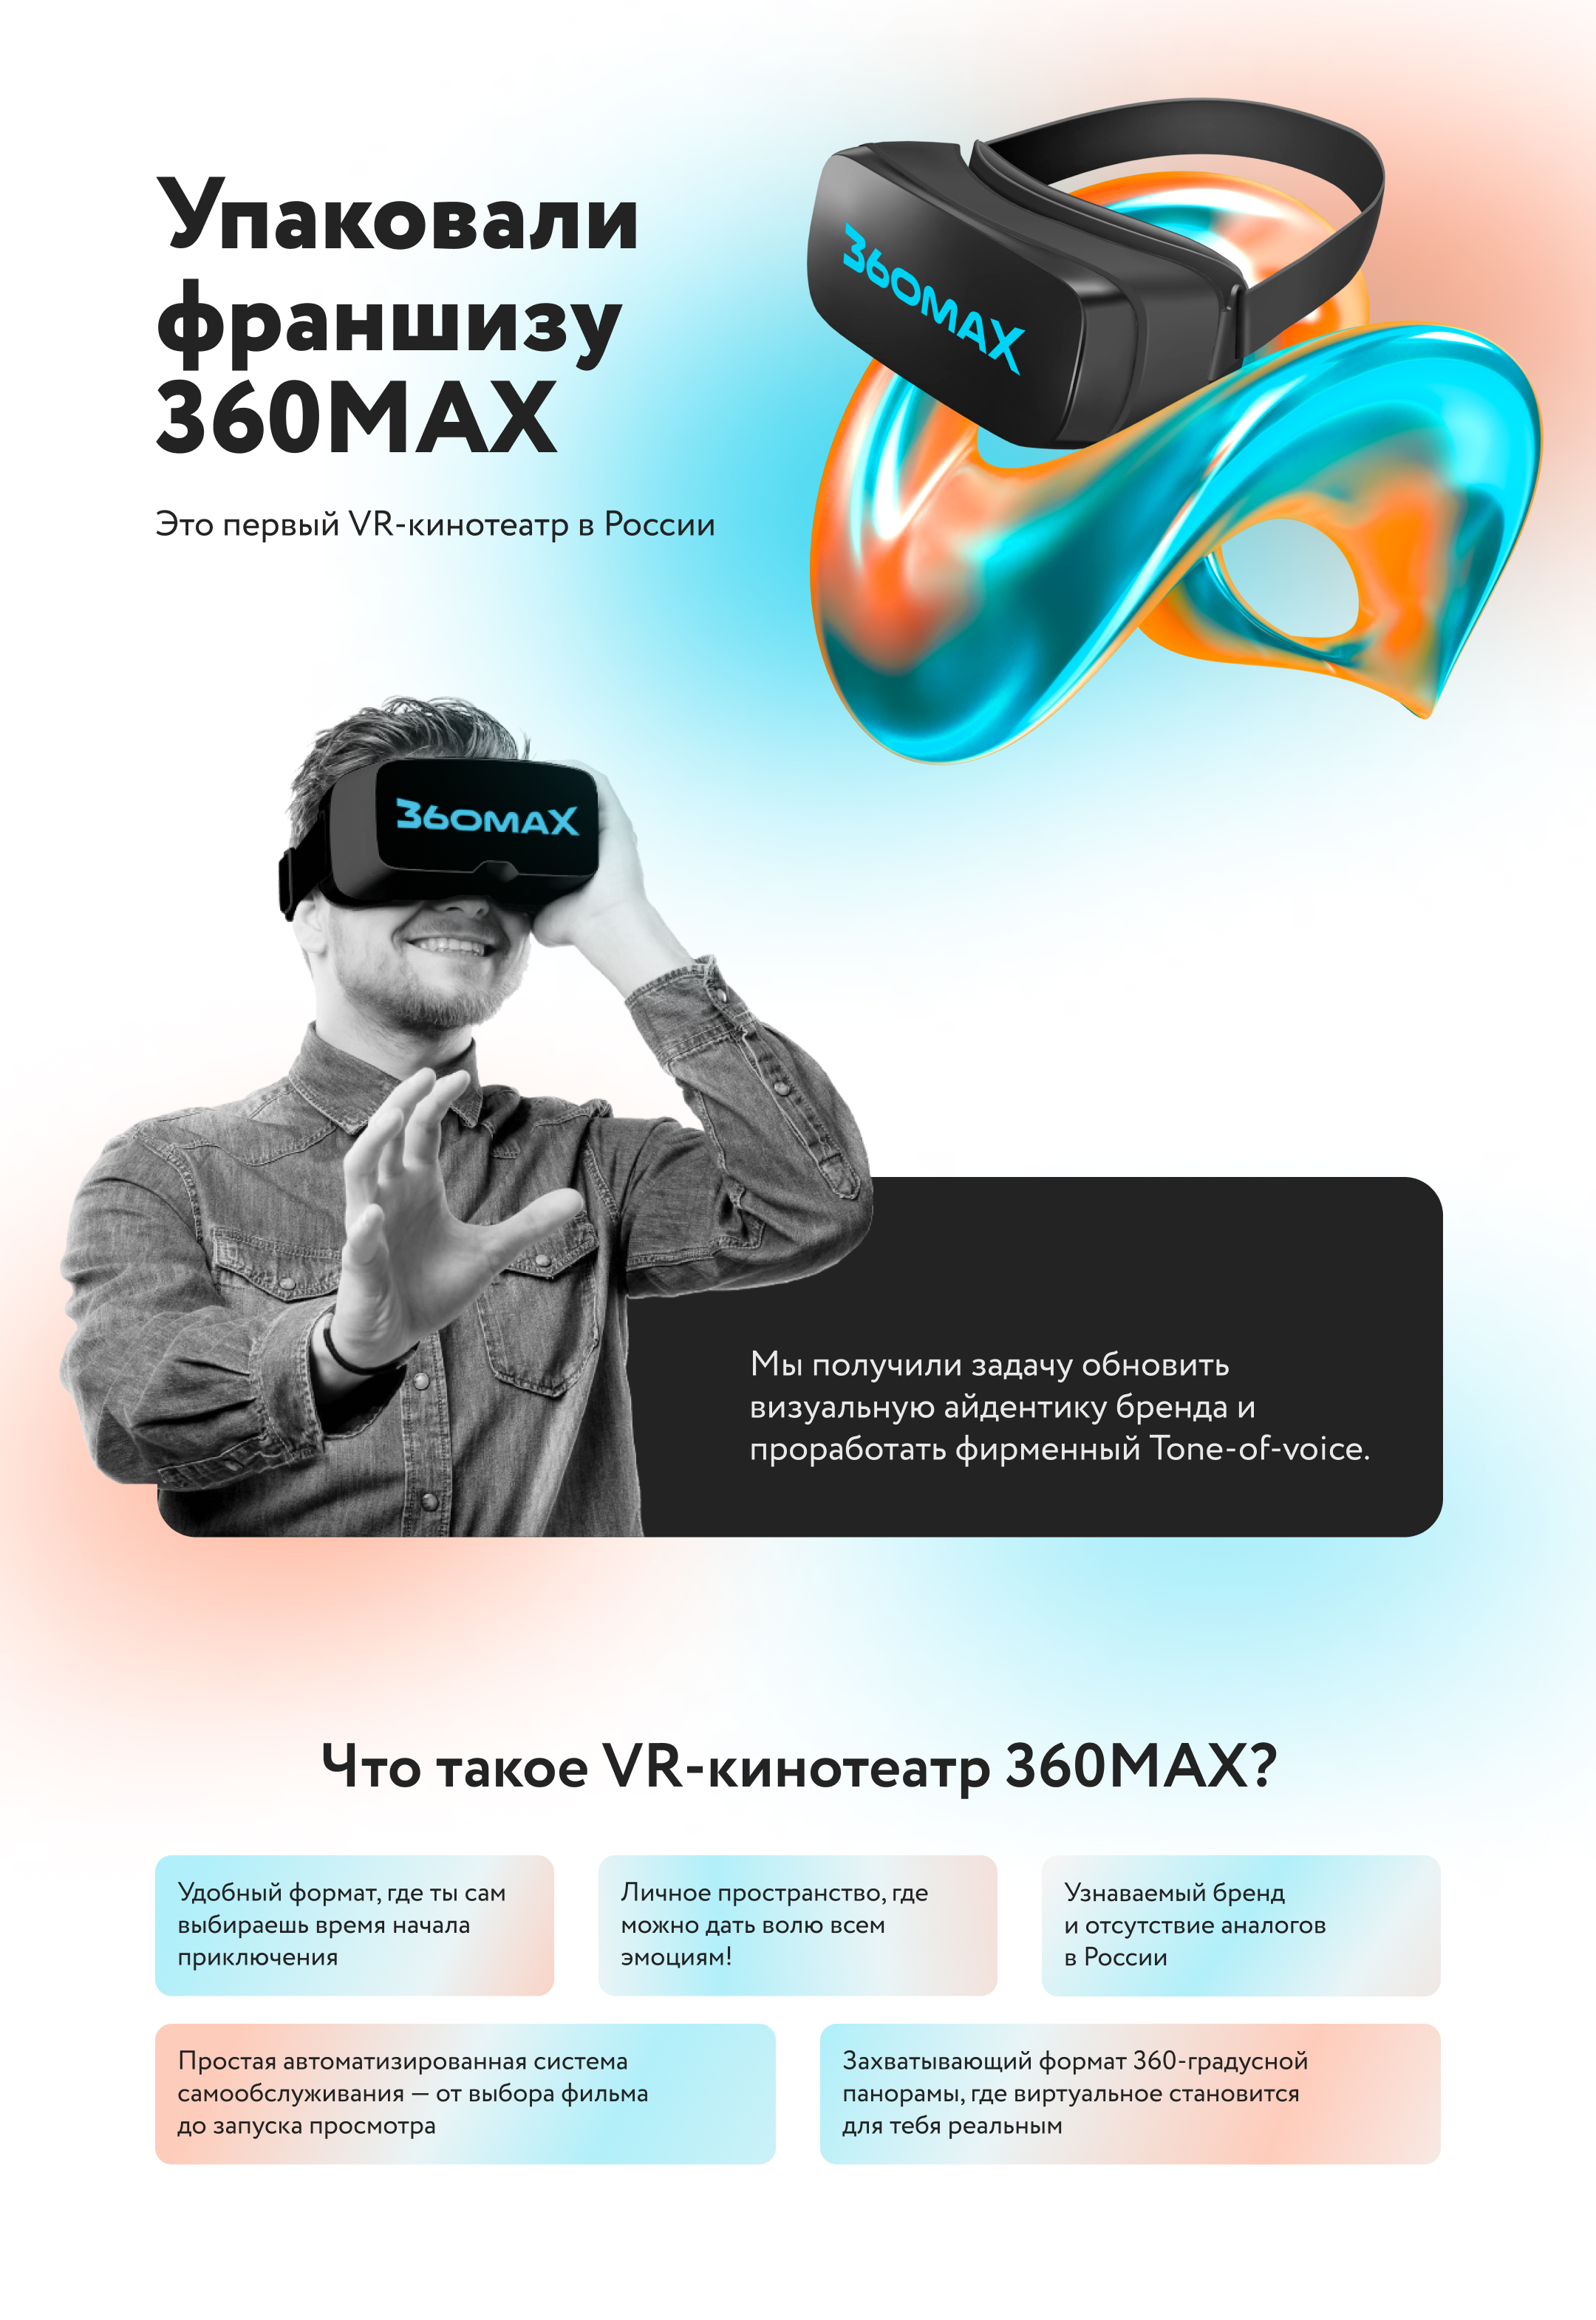 Упаковали франшизу 360MAX — Изображение №1 — Брендинг, Графика на Dprofile